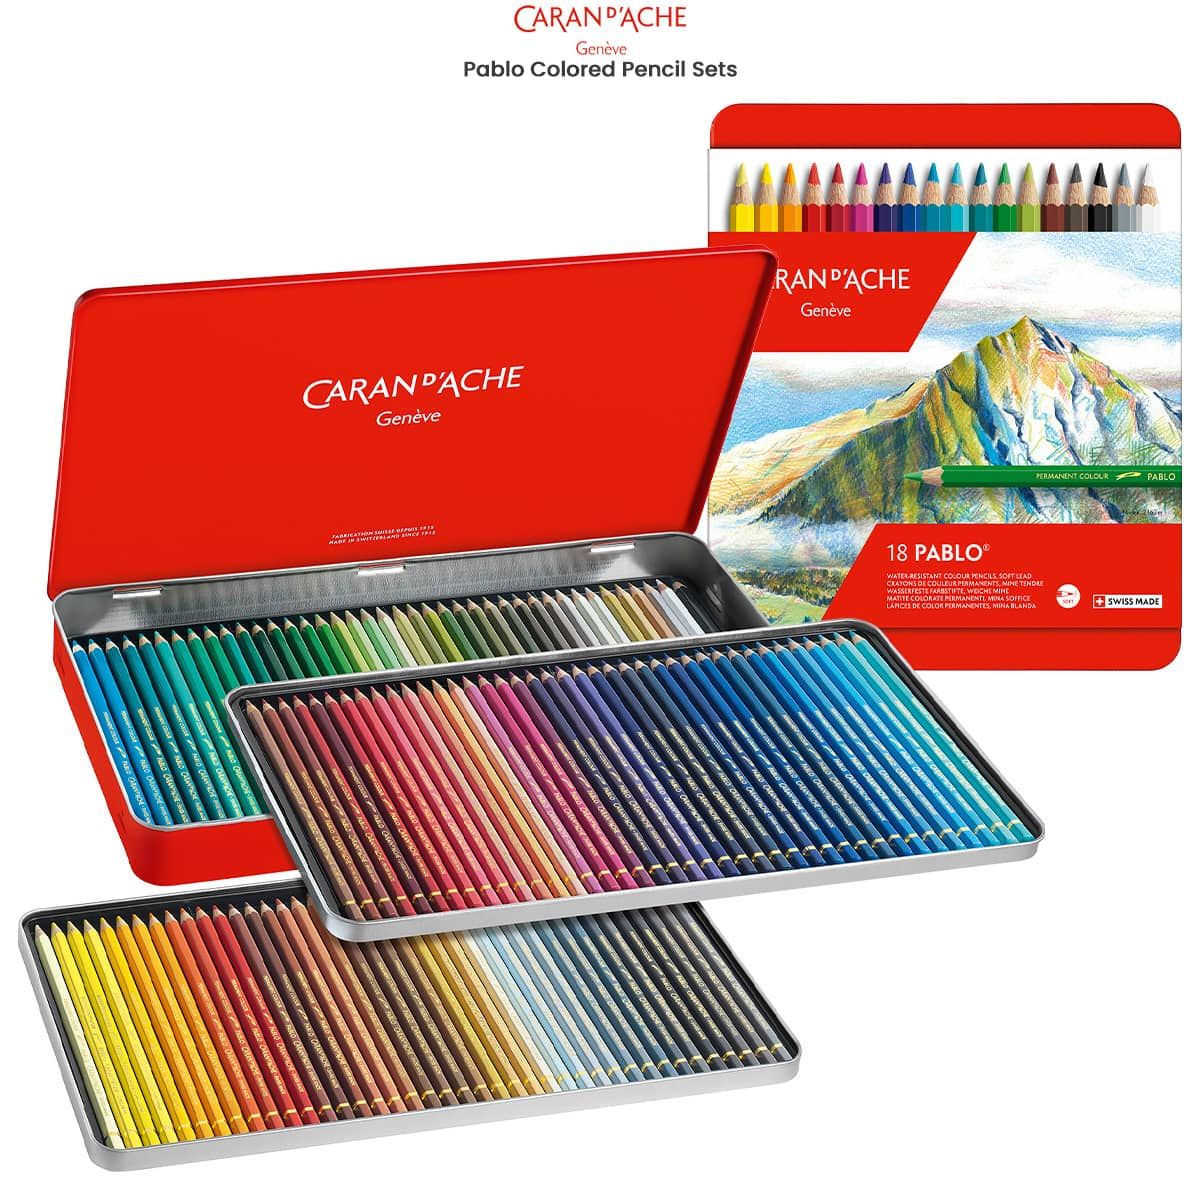 https://www.jerrysartarama.com/media/catalog/product/cache/ecb49a32eeb5603594b082bd5fe65733/c/a/caran-dache-pablo-colored-pencil-sets-new-main.jpg